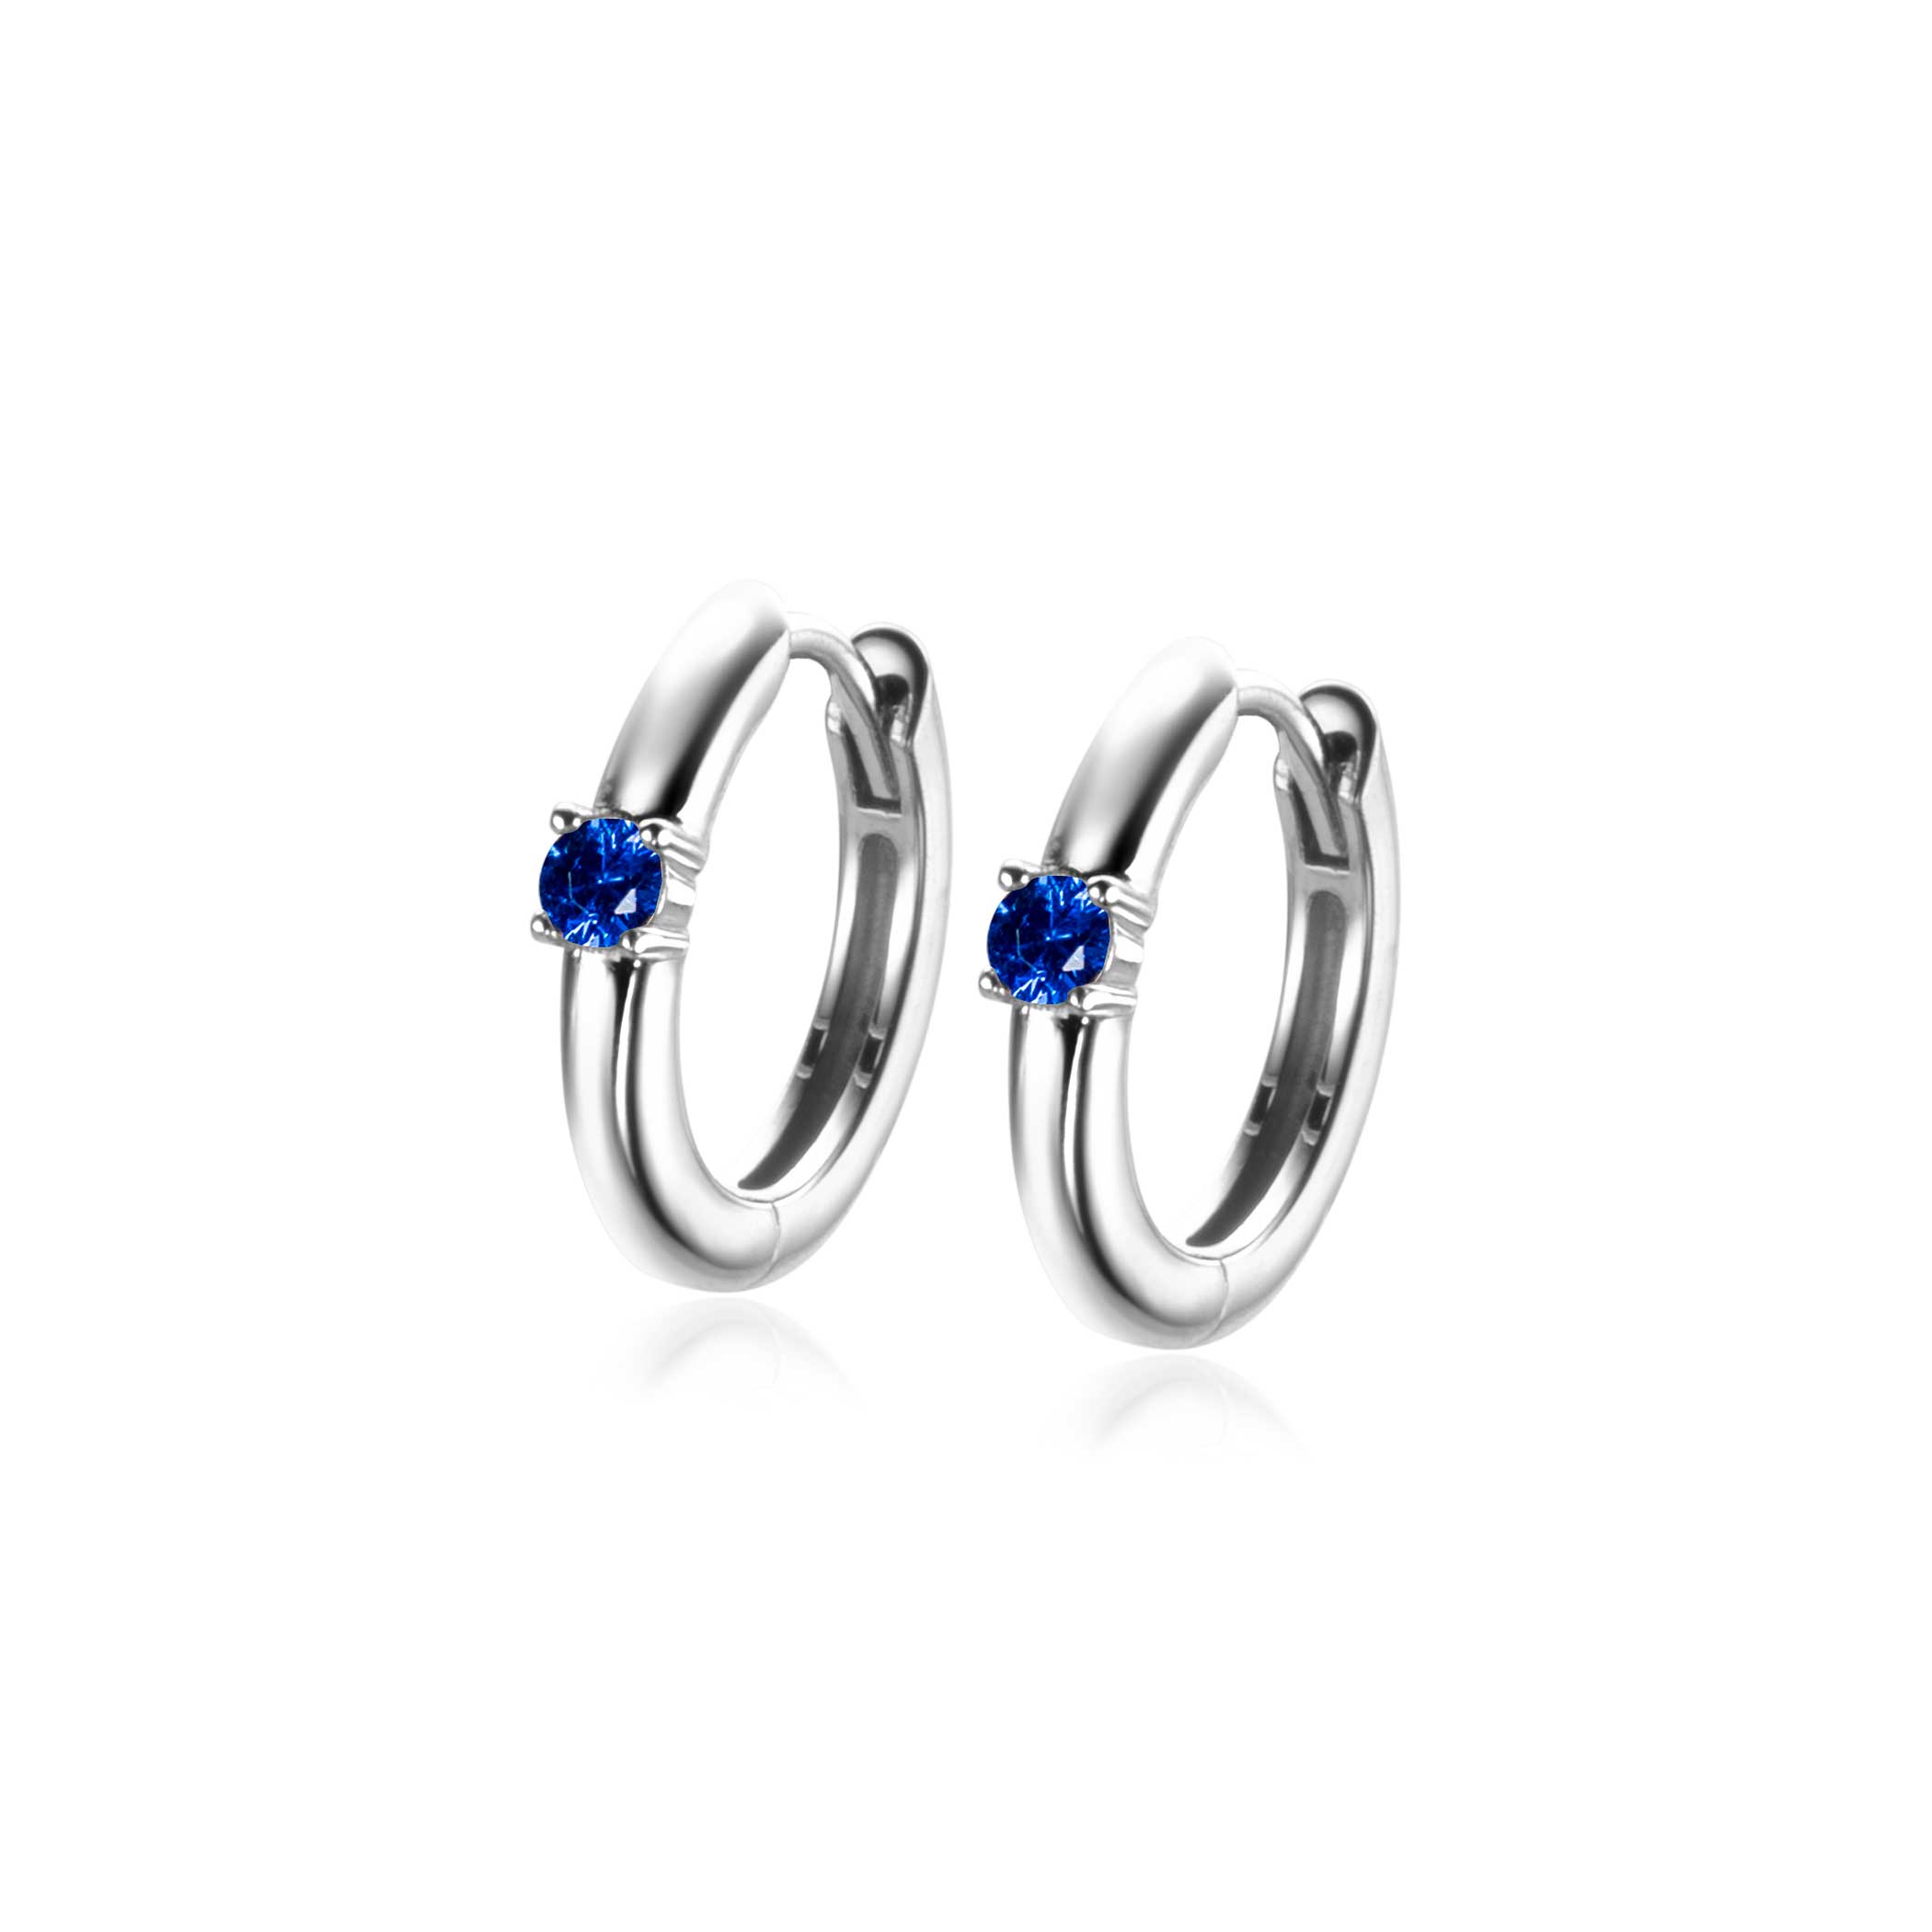 SEPTEMBER Hoop Earrings 13mm Sterling Silver with Birthstone Blue Sapphire Zirconia